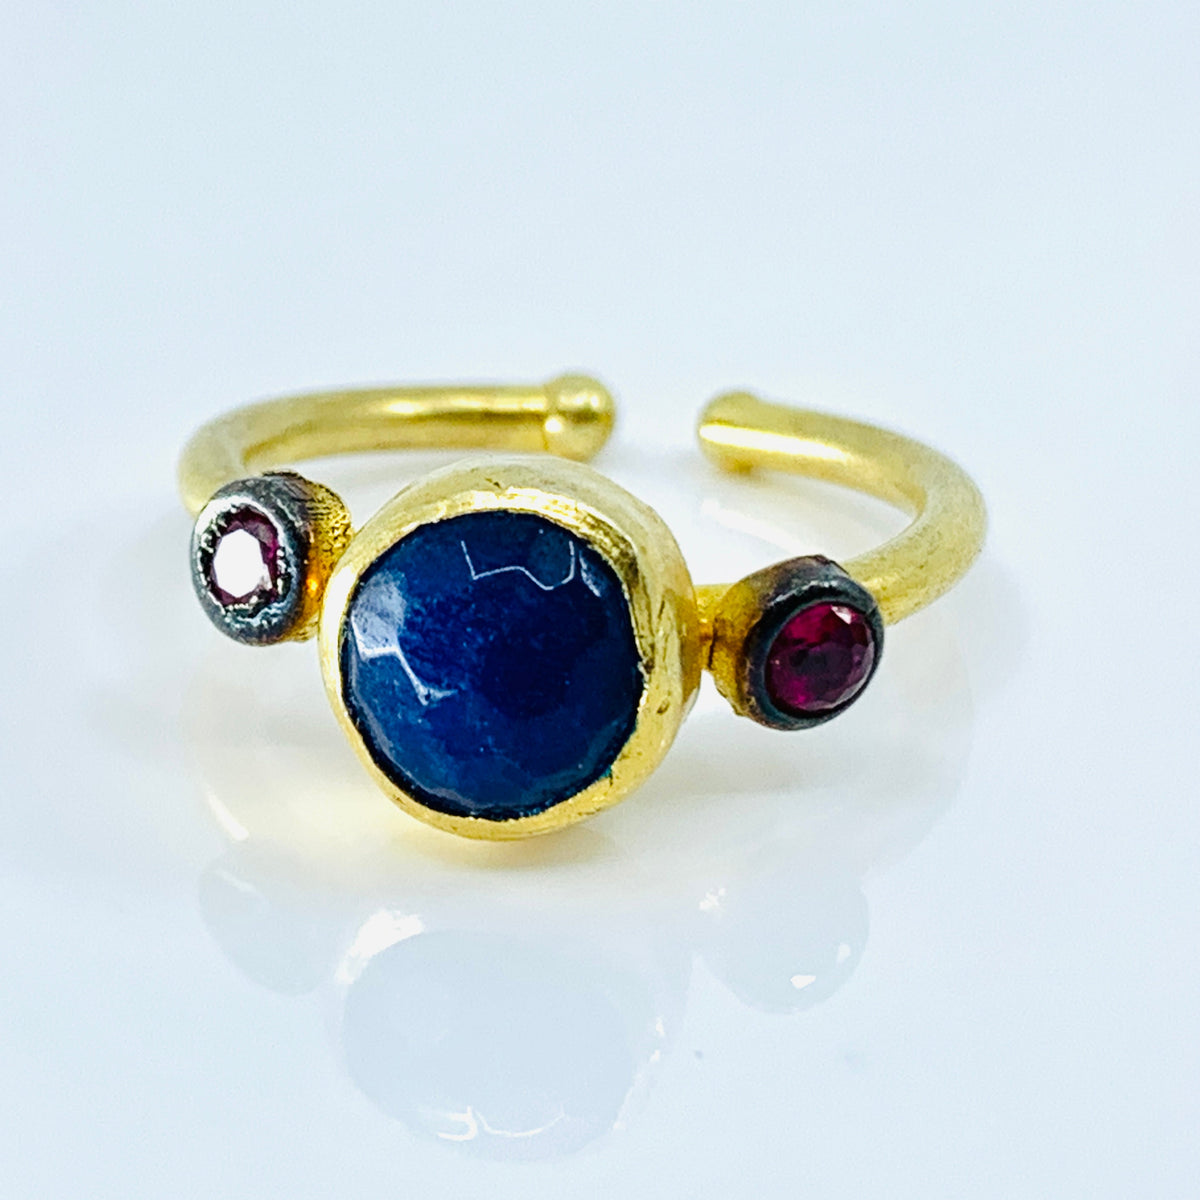 Turkish Brass Adjustable Ring 5 Jewelry Ikat Jewelry 